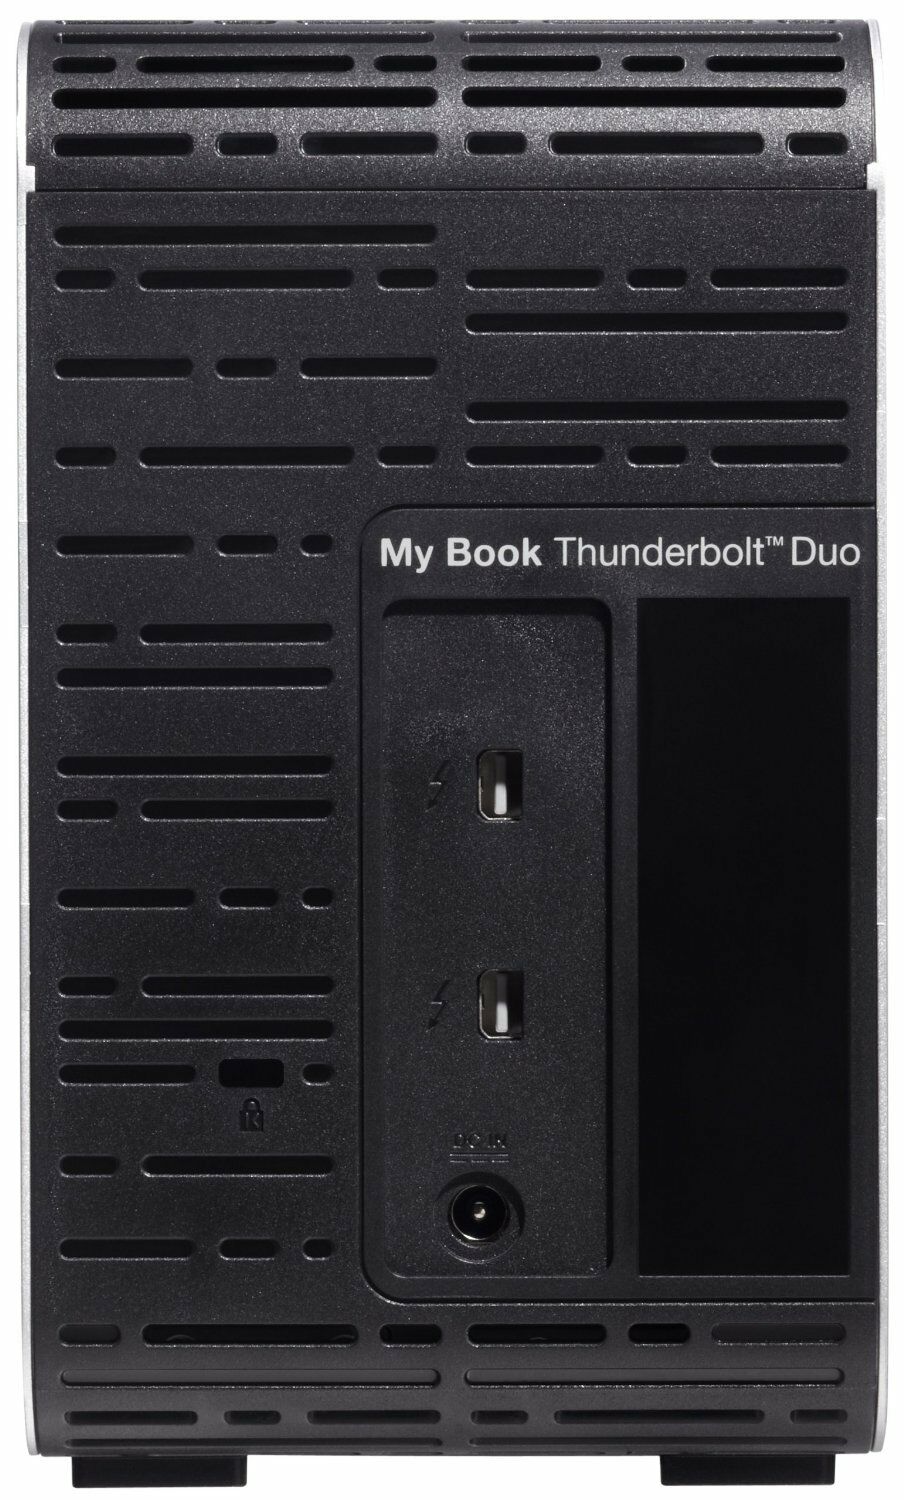 WD My Book 4TB RAID Thunderbolt Duo Dual-Drive External Hard Drive WDBUPB0040JSL